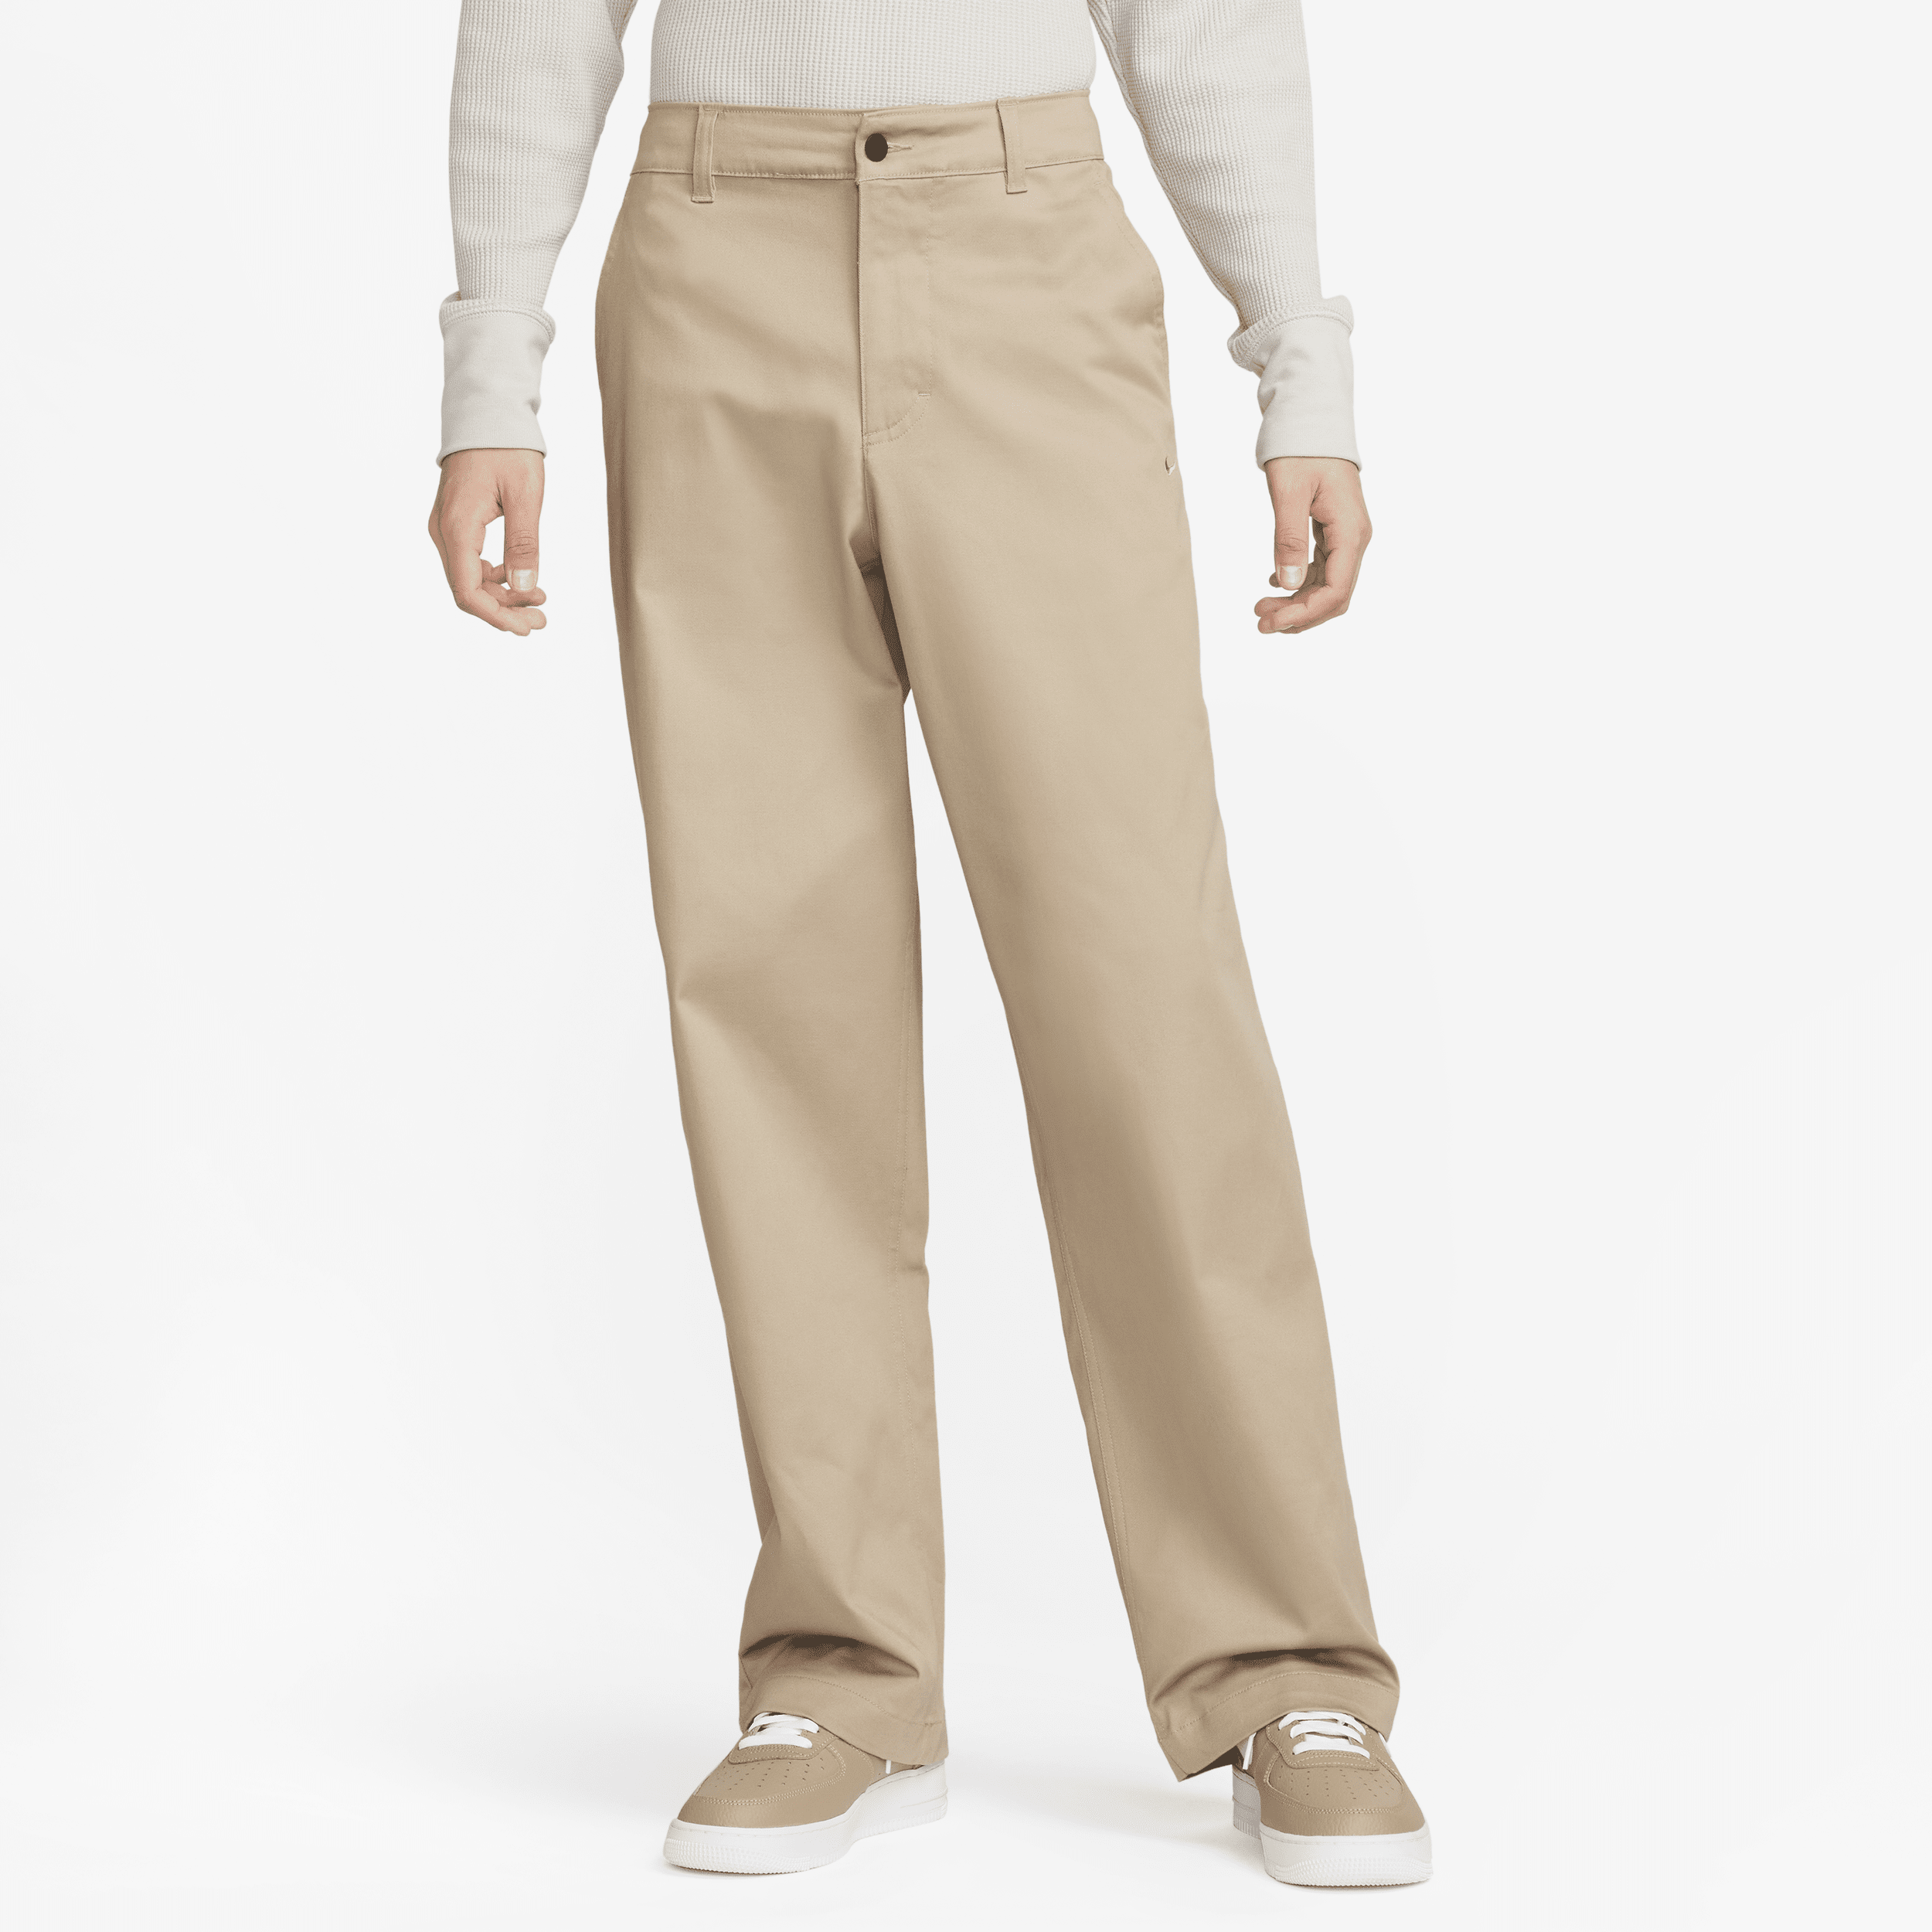 Pantaloni El Chino Nike Life – Uomo - Marrone